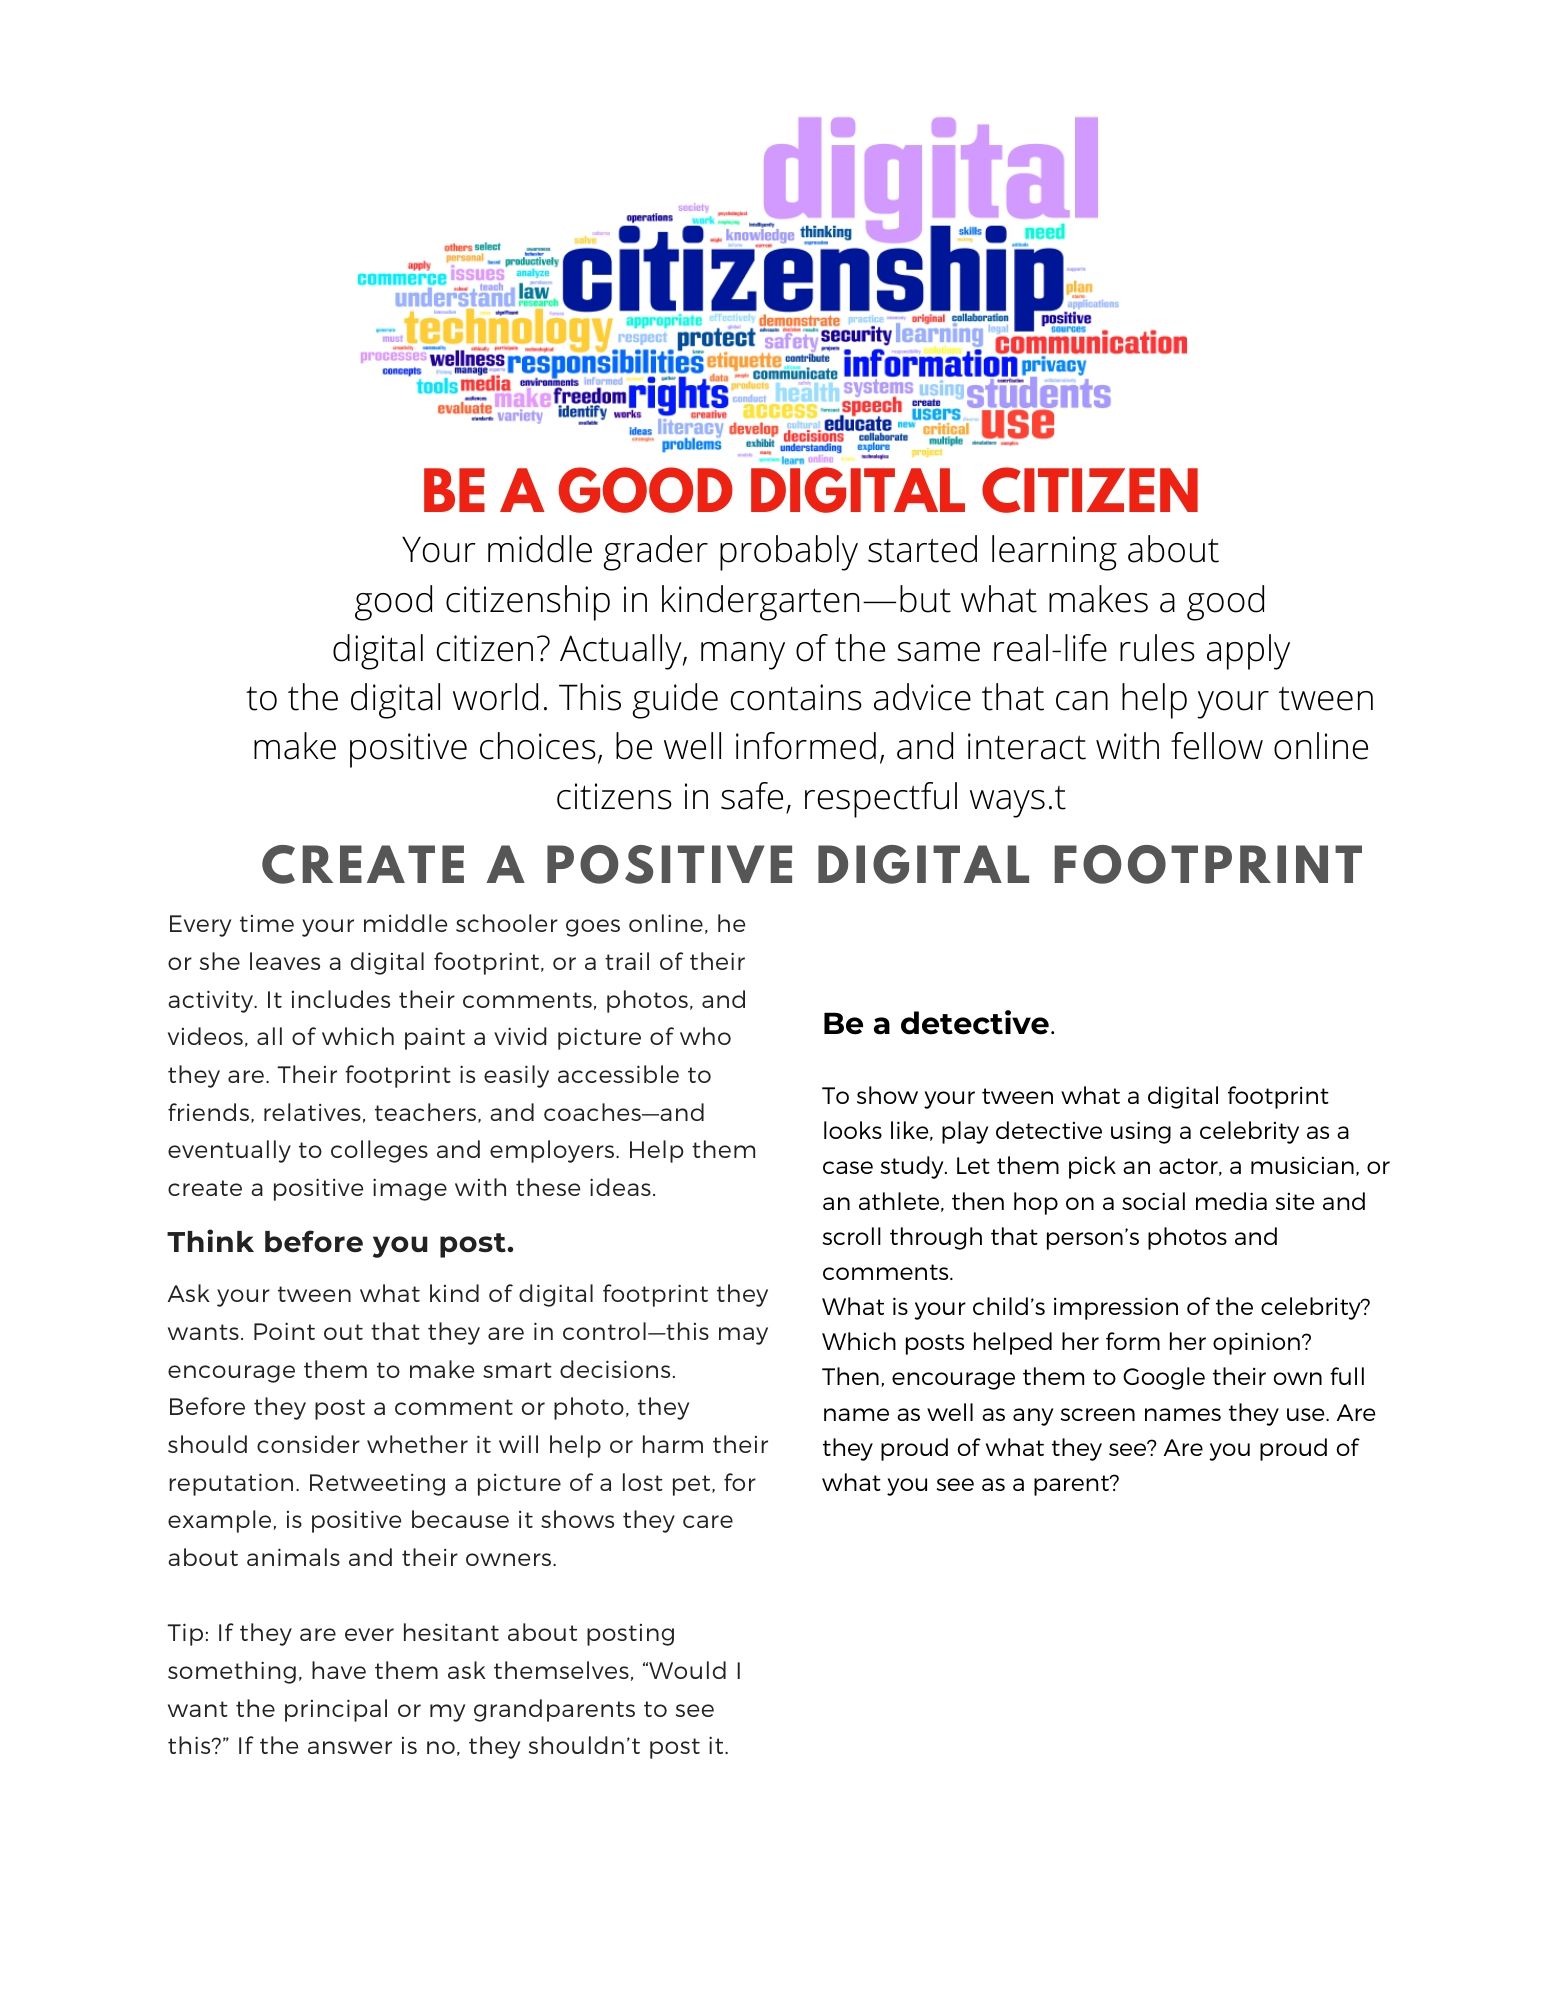 Creative a positive digital footprint